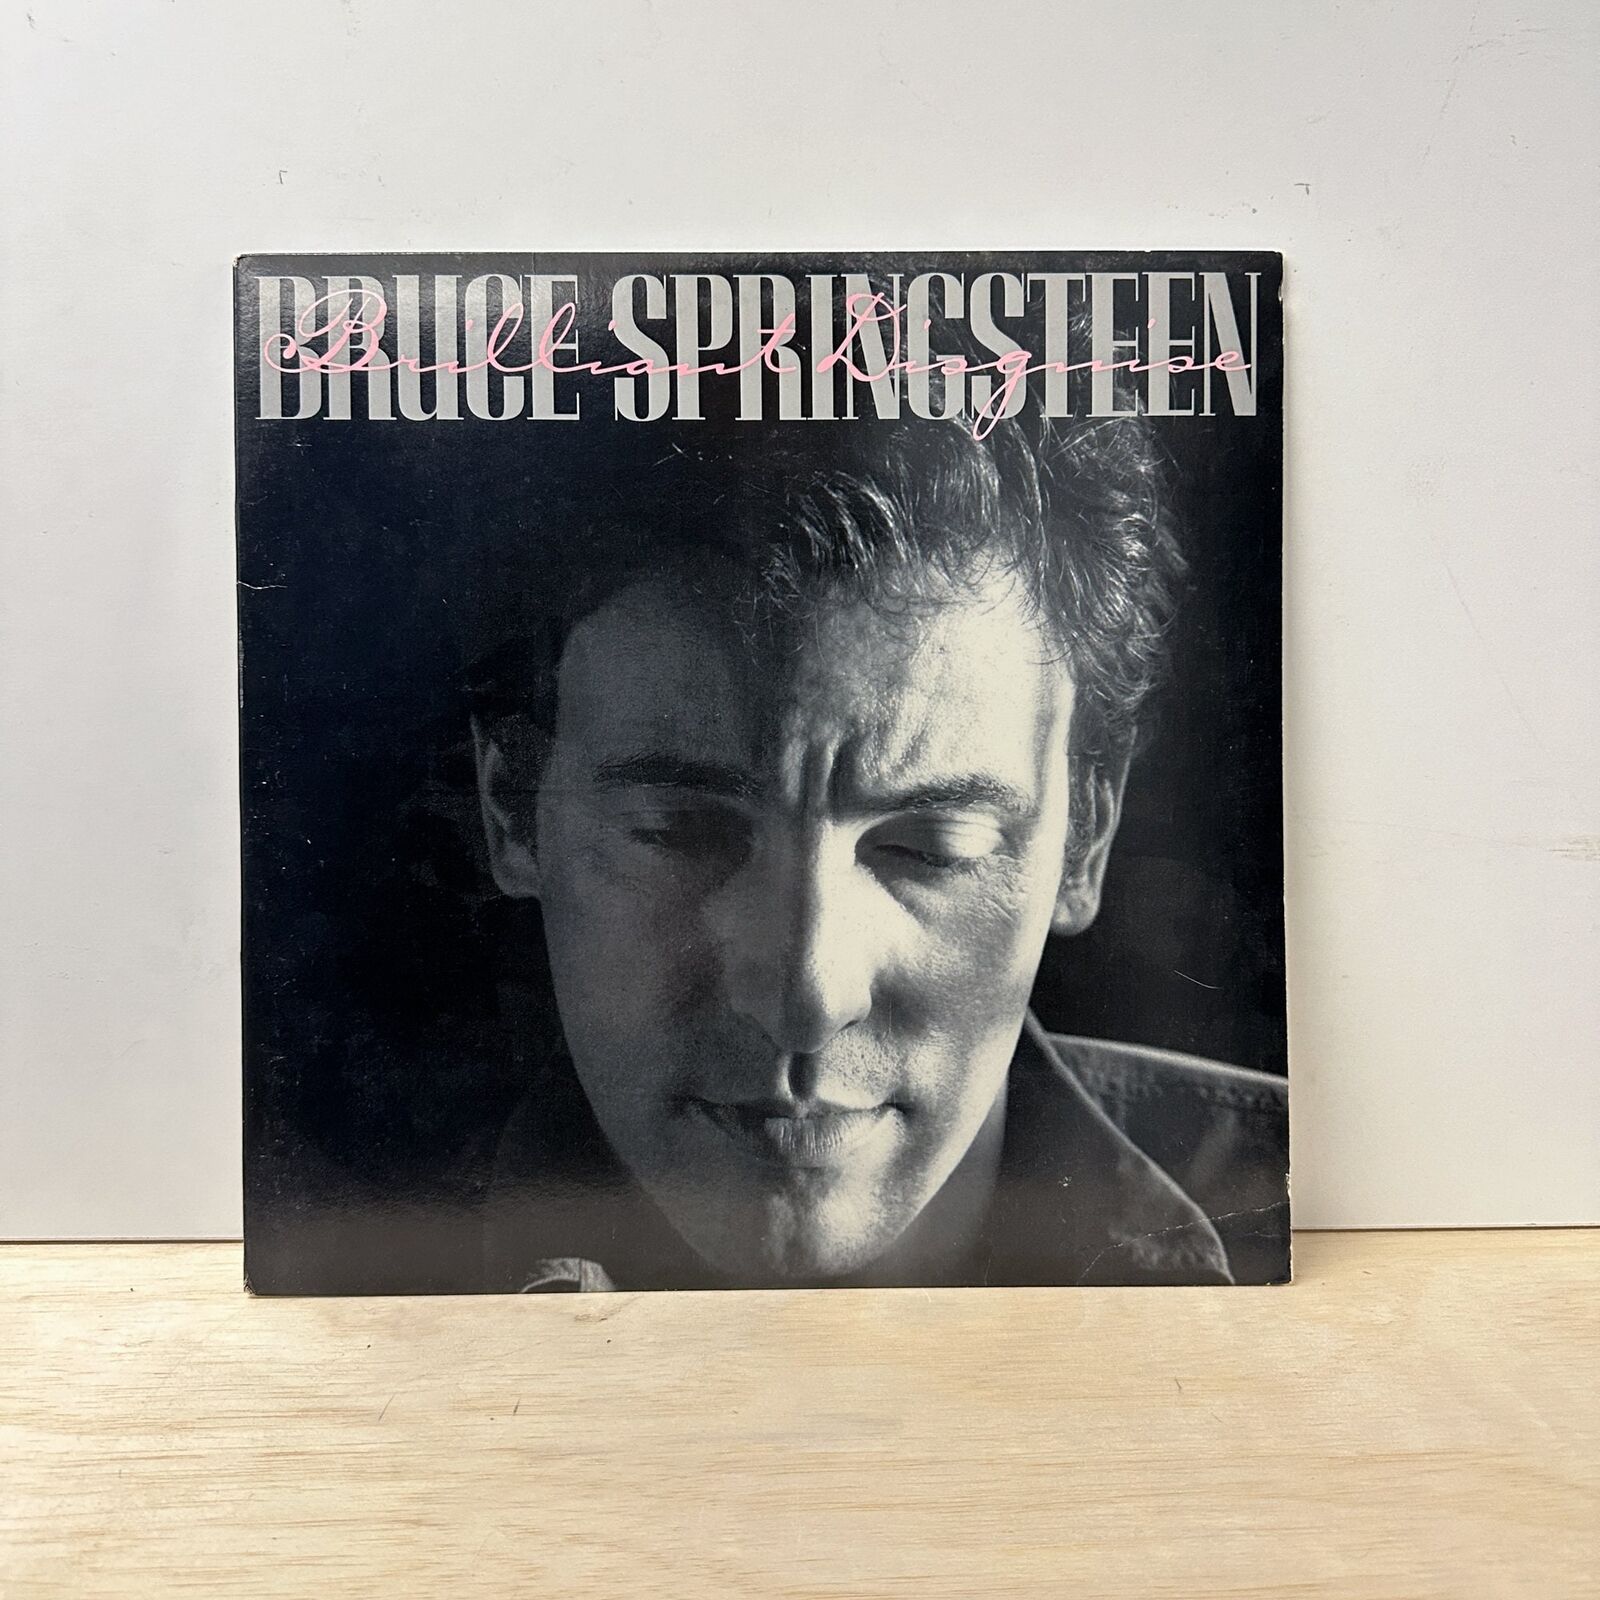 Bruce Springsteen - Brilliant Disguise - Vinyl LP Record - 1987